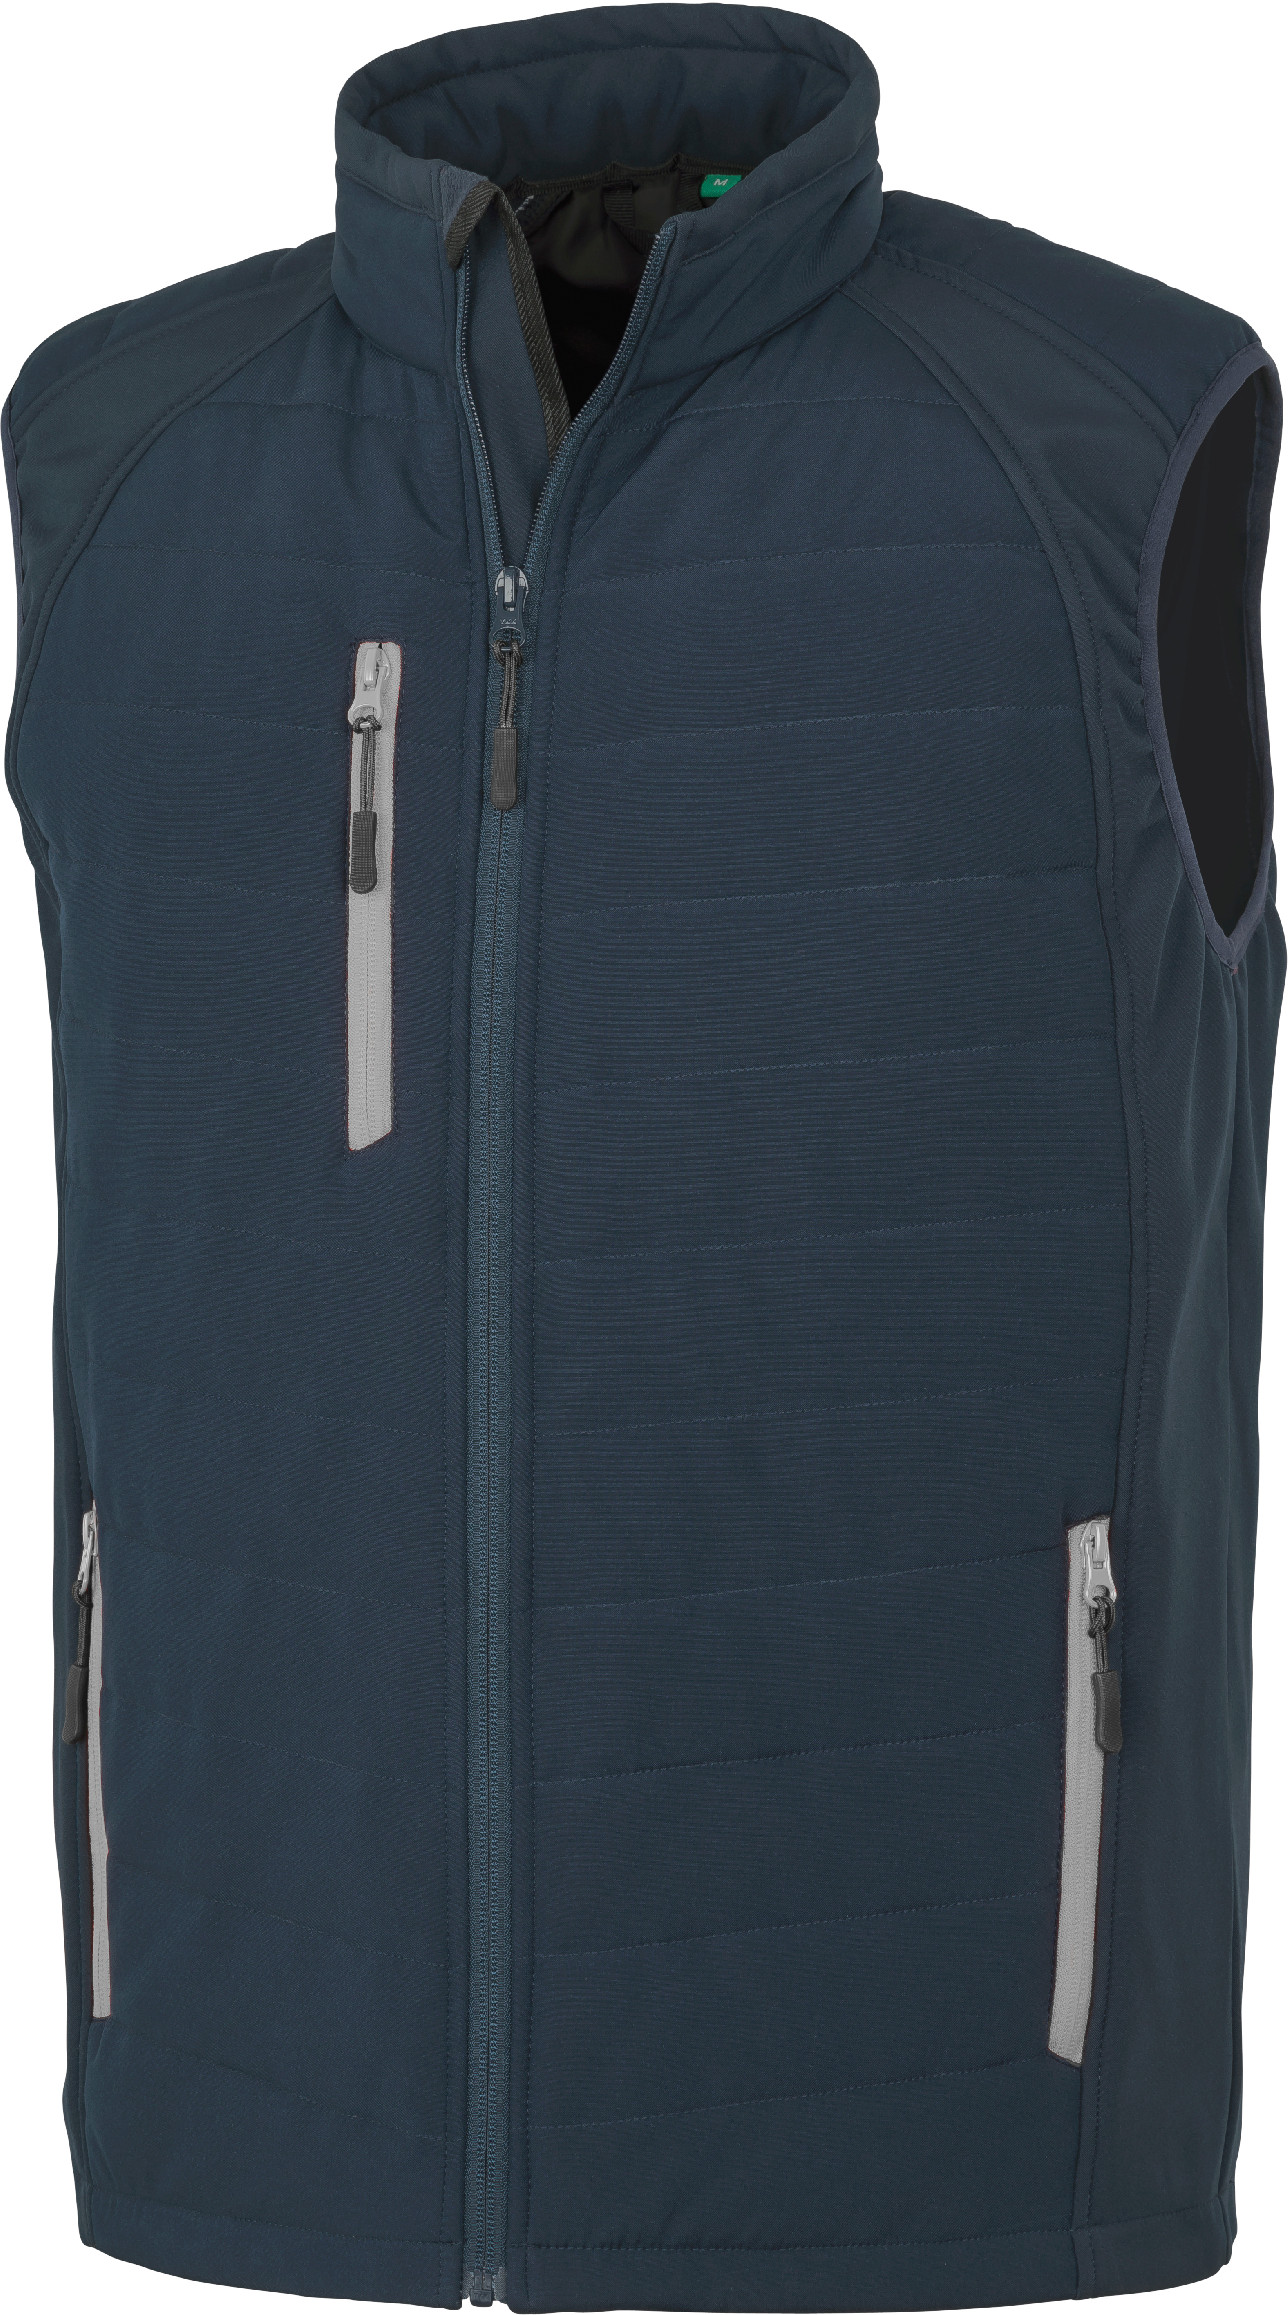 Polstrovaná softshell vesta Compass R238X Barva: námořní modrá-šedá, Velikost: 3XL